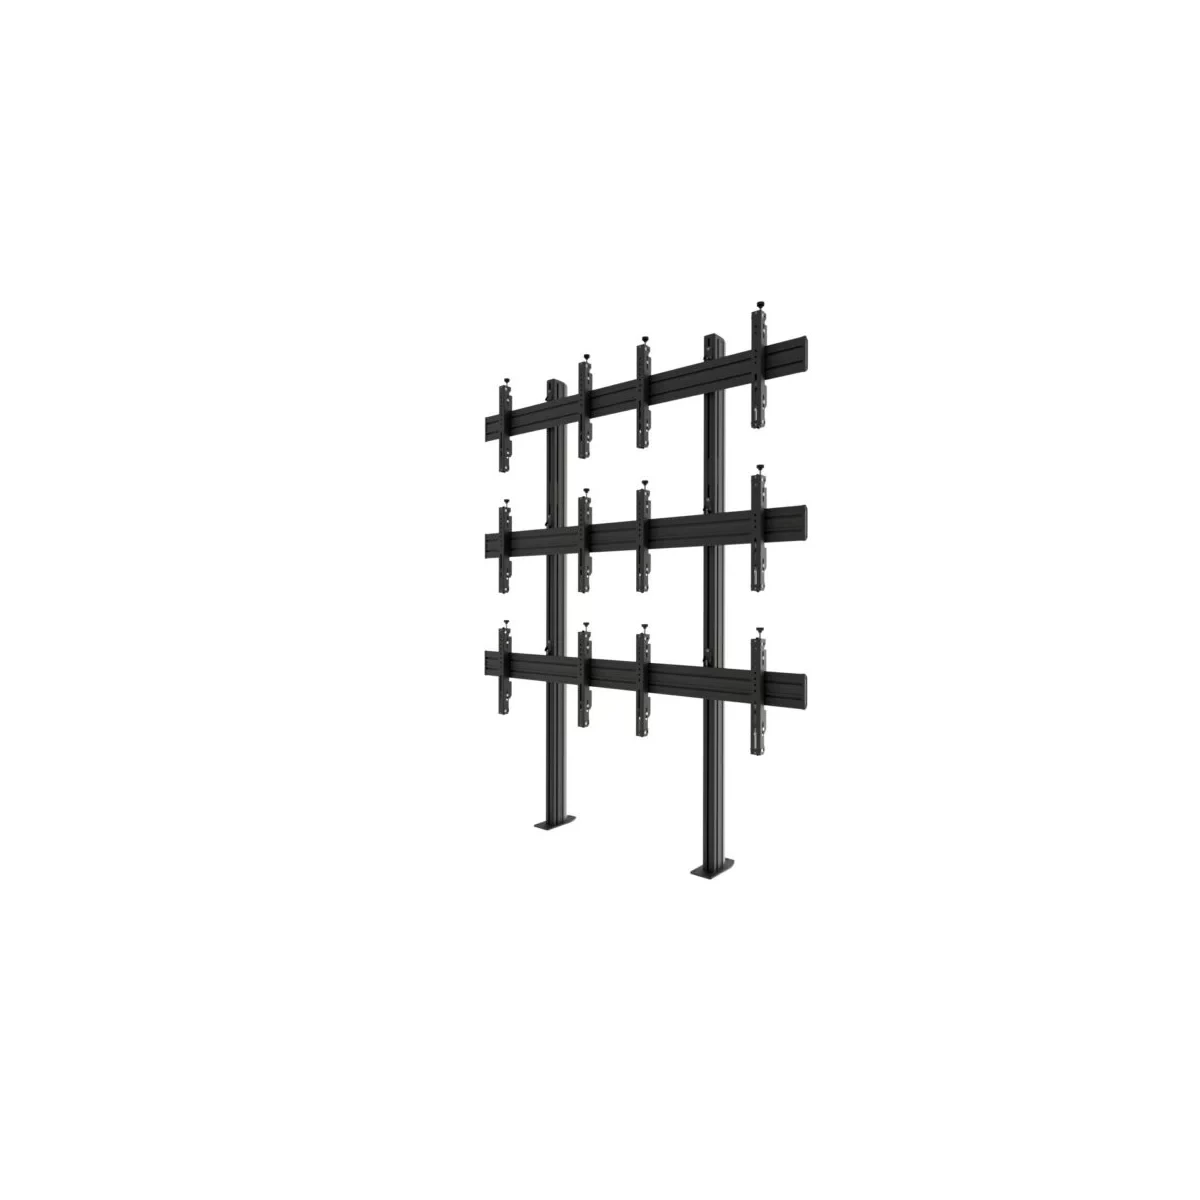 Edbak VWSA2347-L Video Wall Bolt Down Stand, modular 2×3, for 42″-49″ Screens, Landscape